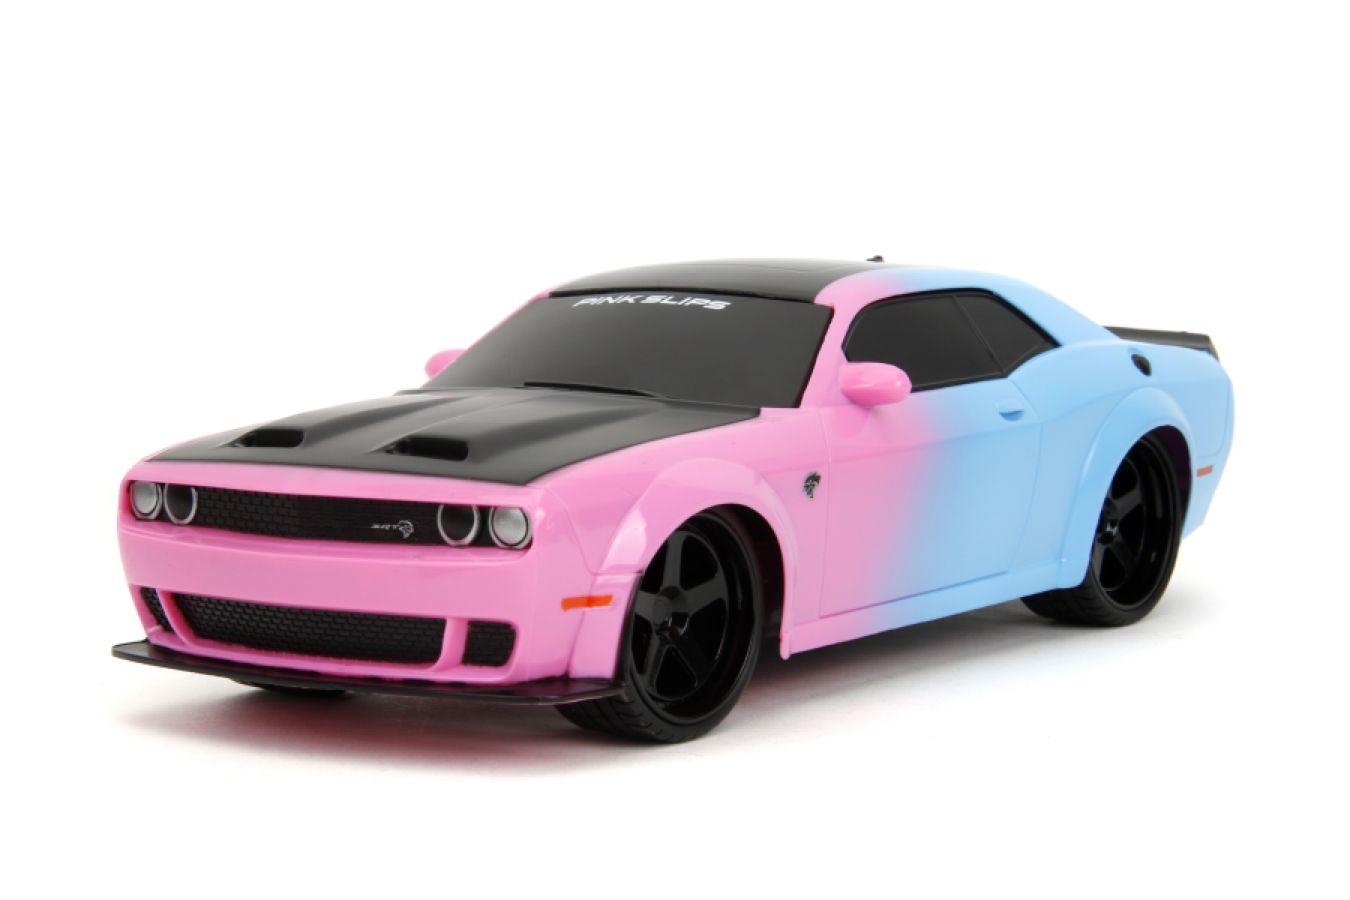 JAD35593 Pink Slips - 2019 Dodge Challenger SRT Hellcat 1:16 Scale Remote Control Car - Jada Toys - Titan Pop Culture